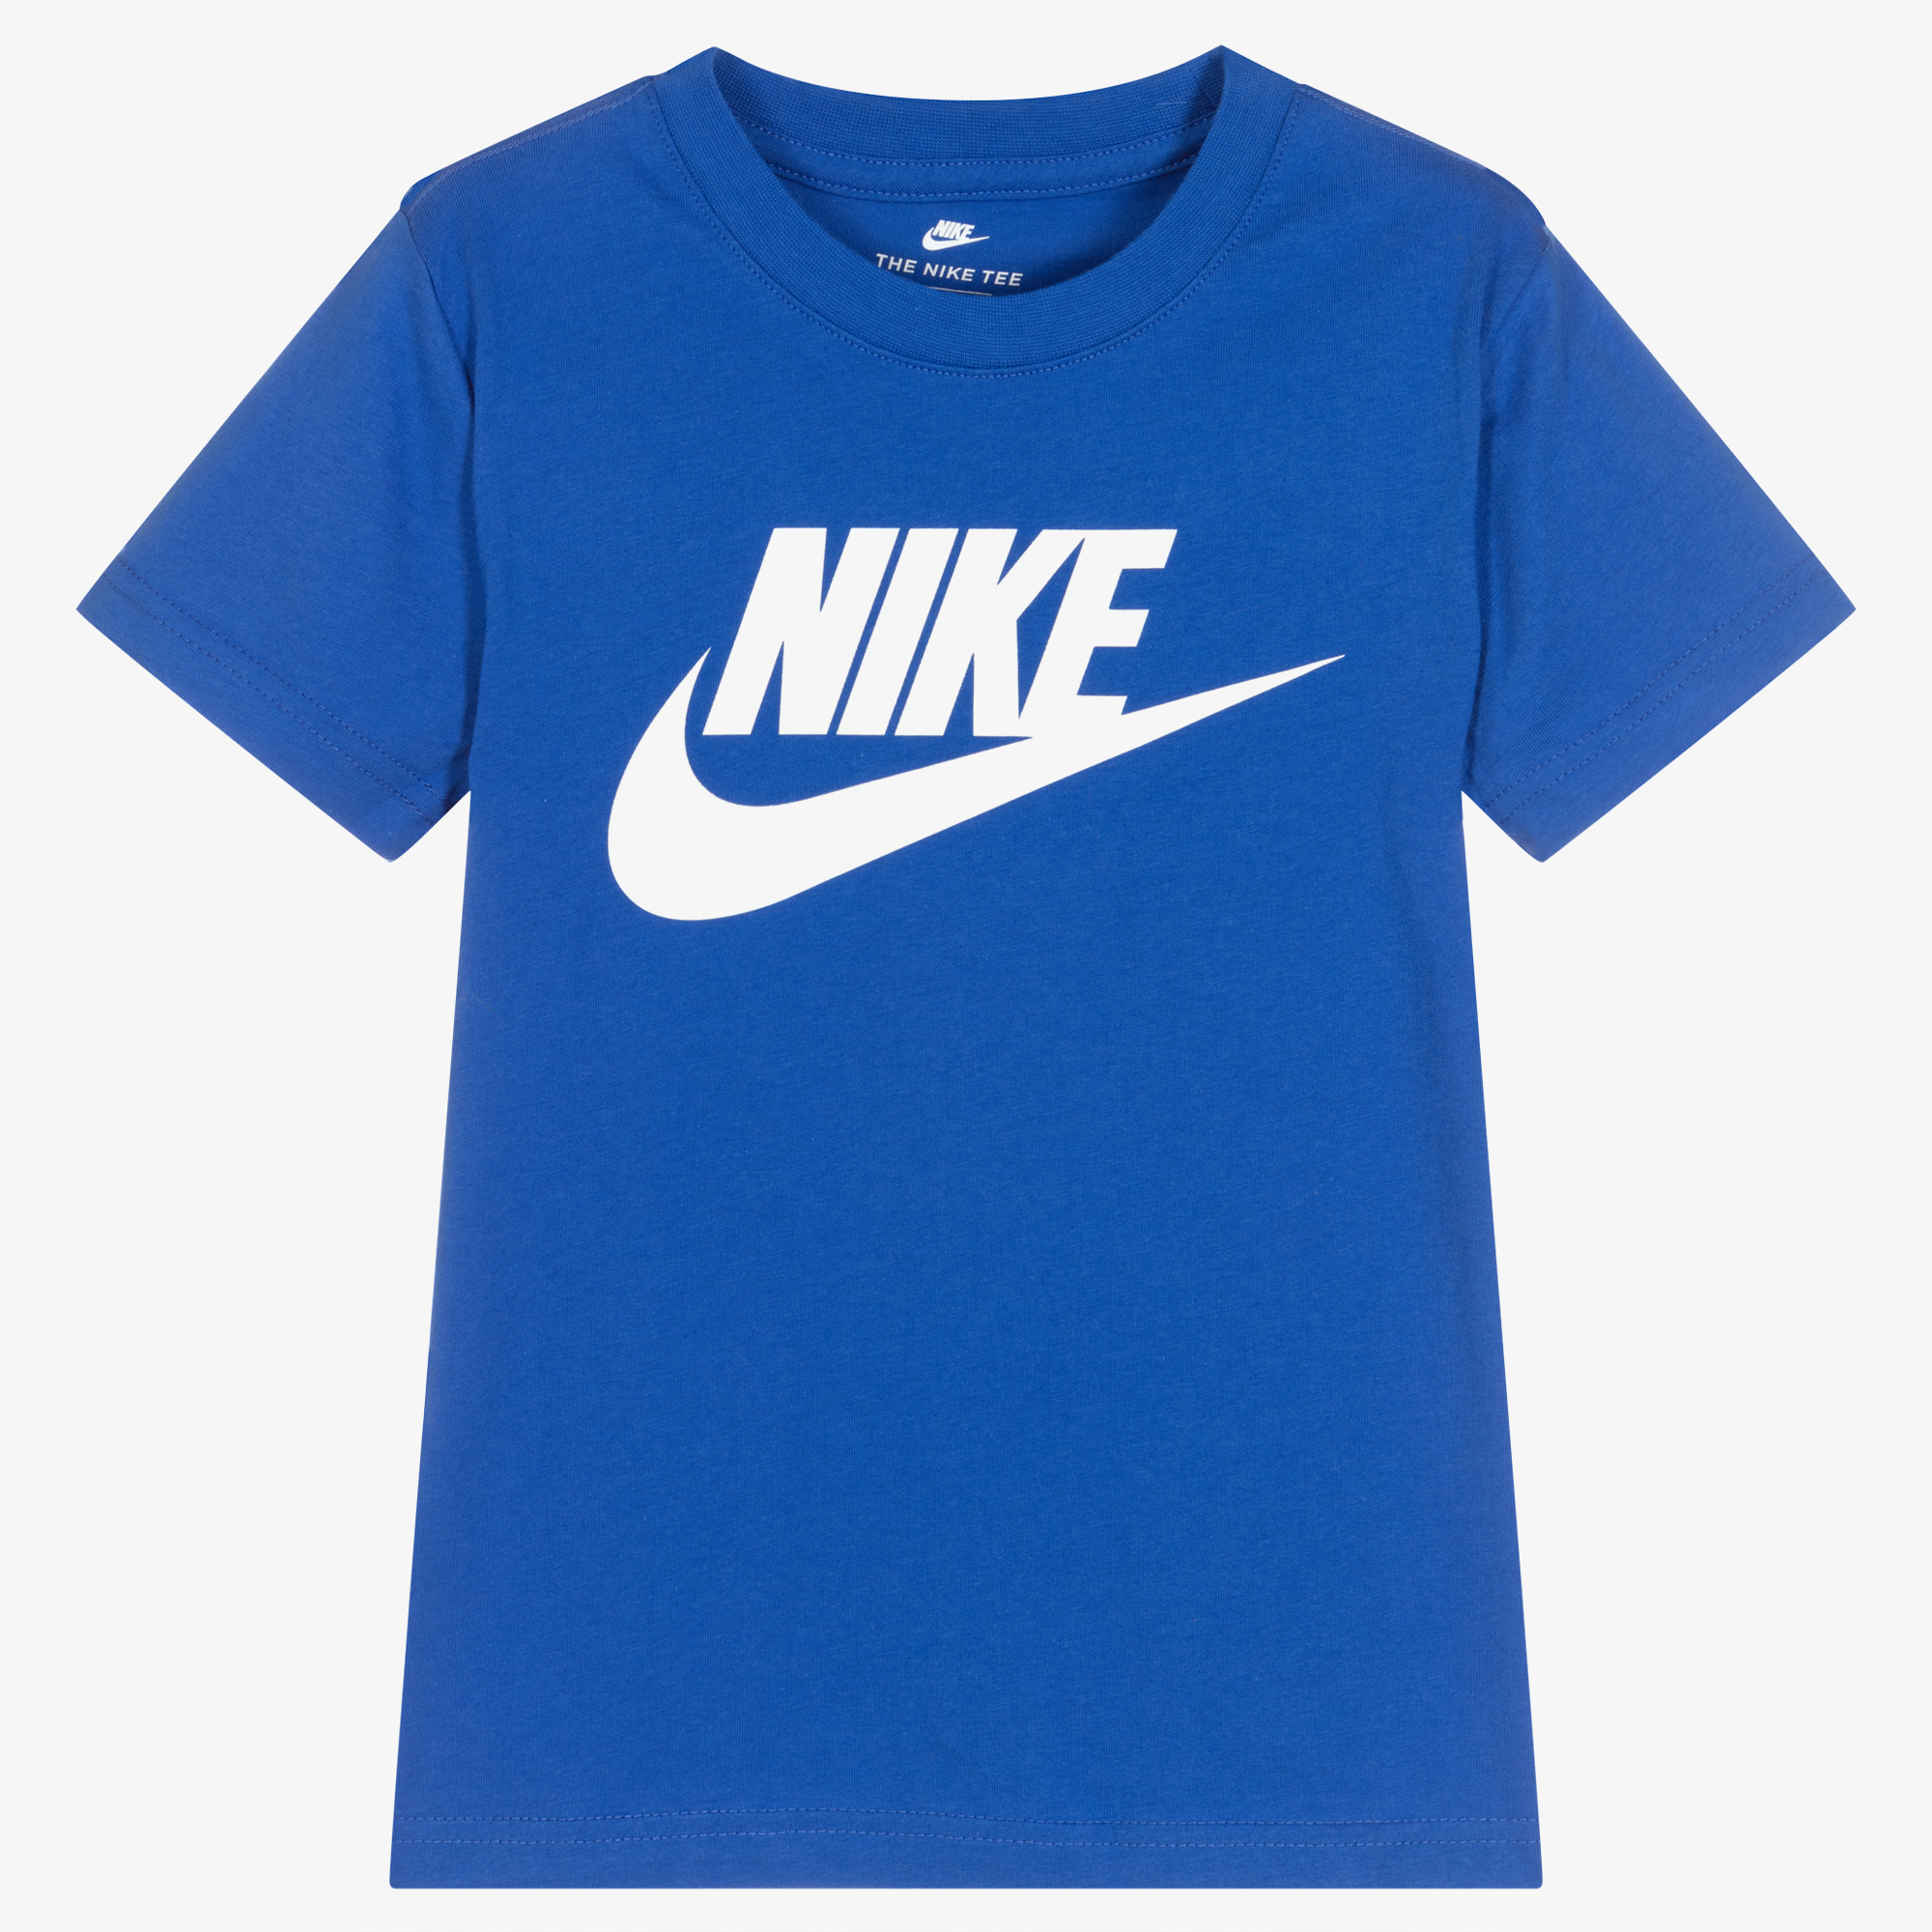 Футболки найк мужские купить. Nike футболка голубая найк. Nike Blue Shirt. Футболка найк Блю Jays. The Nike Tee.